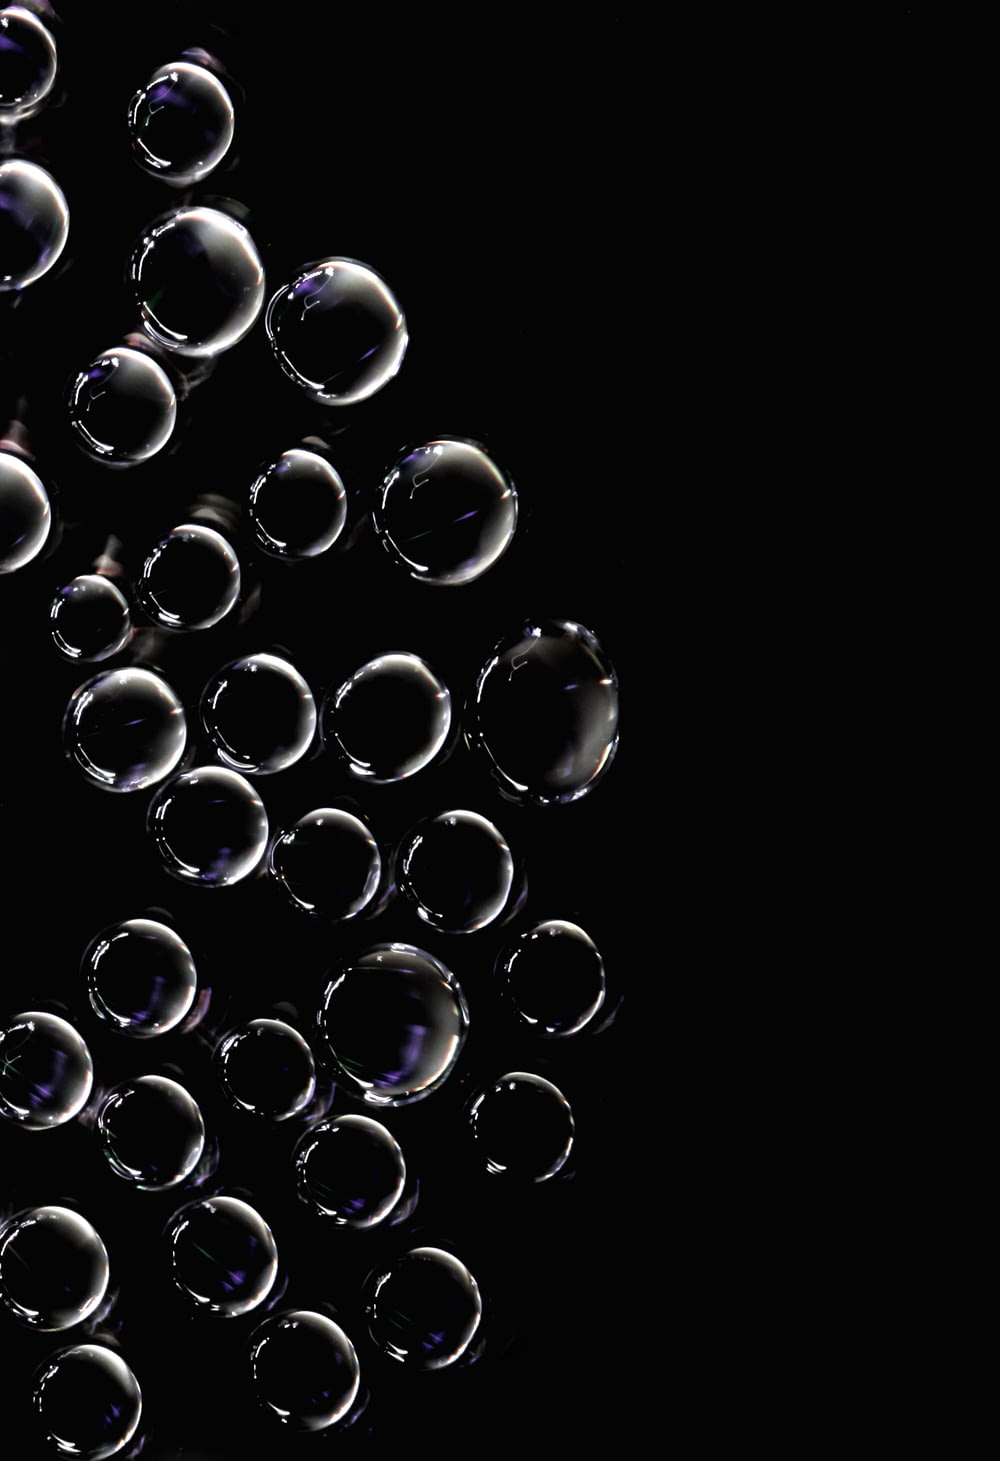 black and white bubbles wallpaper